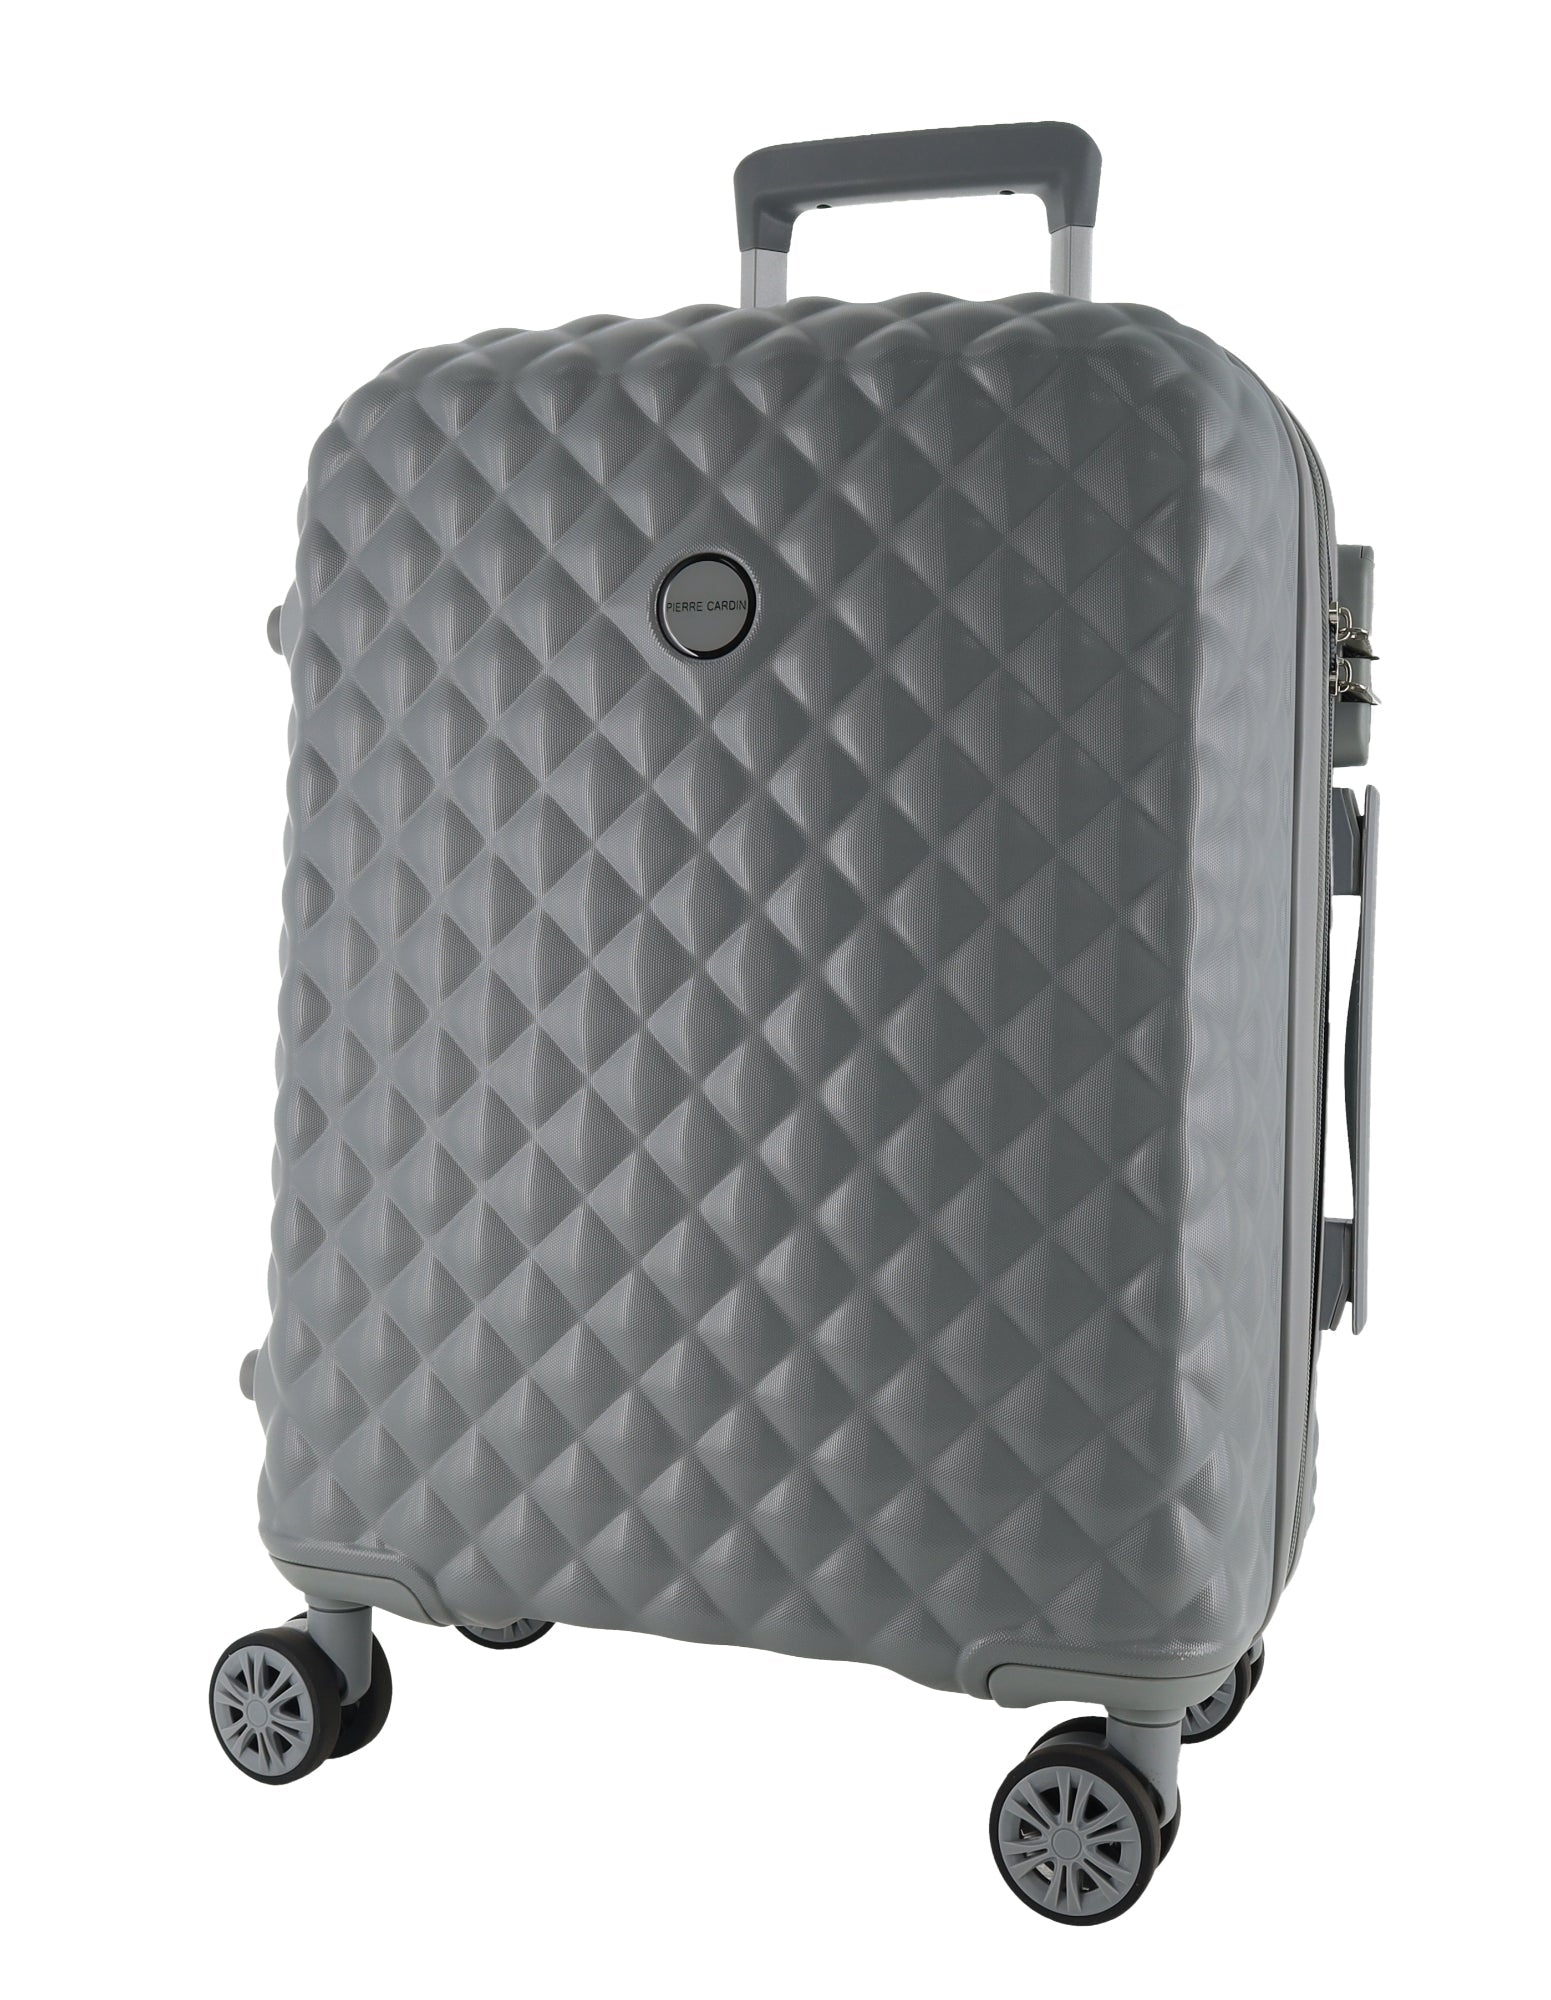 Pierre Cardin 54cm CABIN Hard Shell Suitcase in Teal